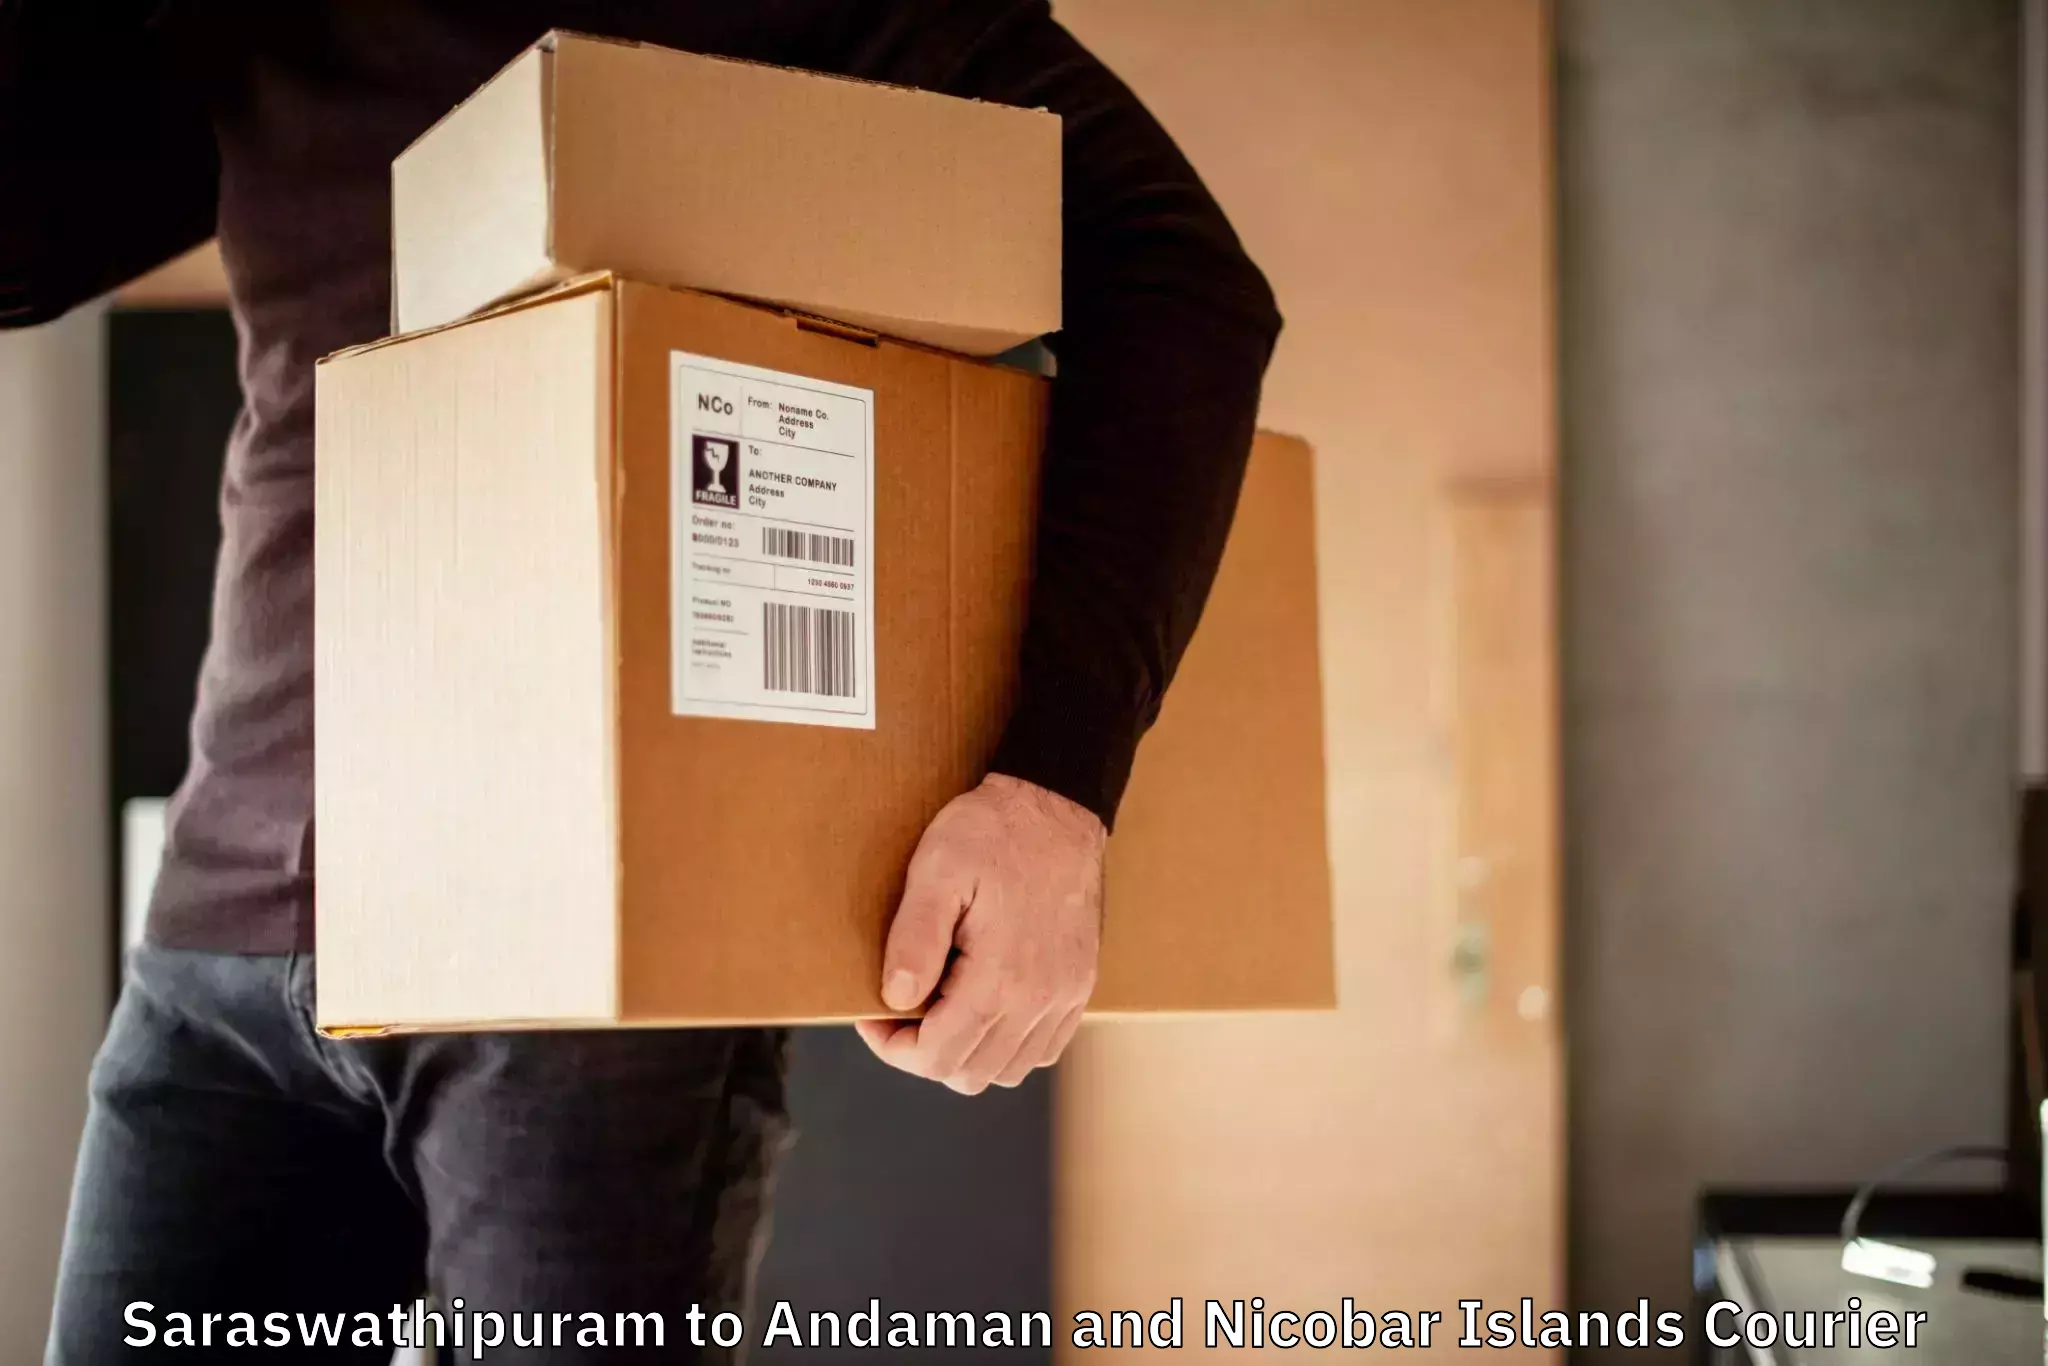 Local delivery service Saraswathipuram to Andaman and Nicobar Islands